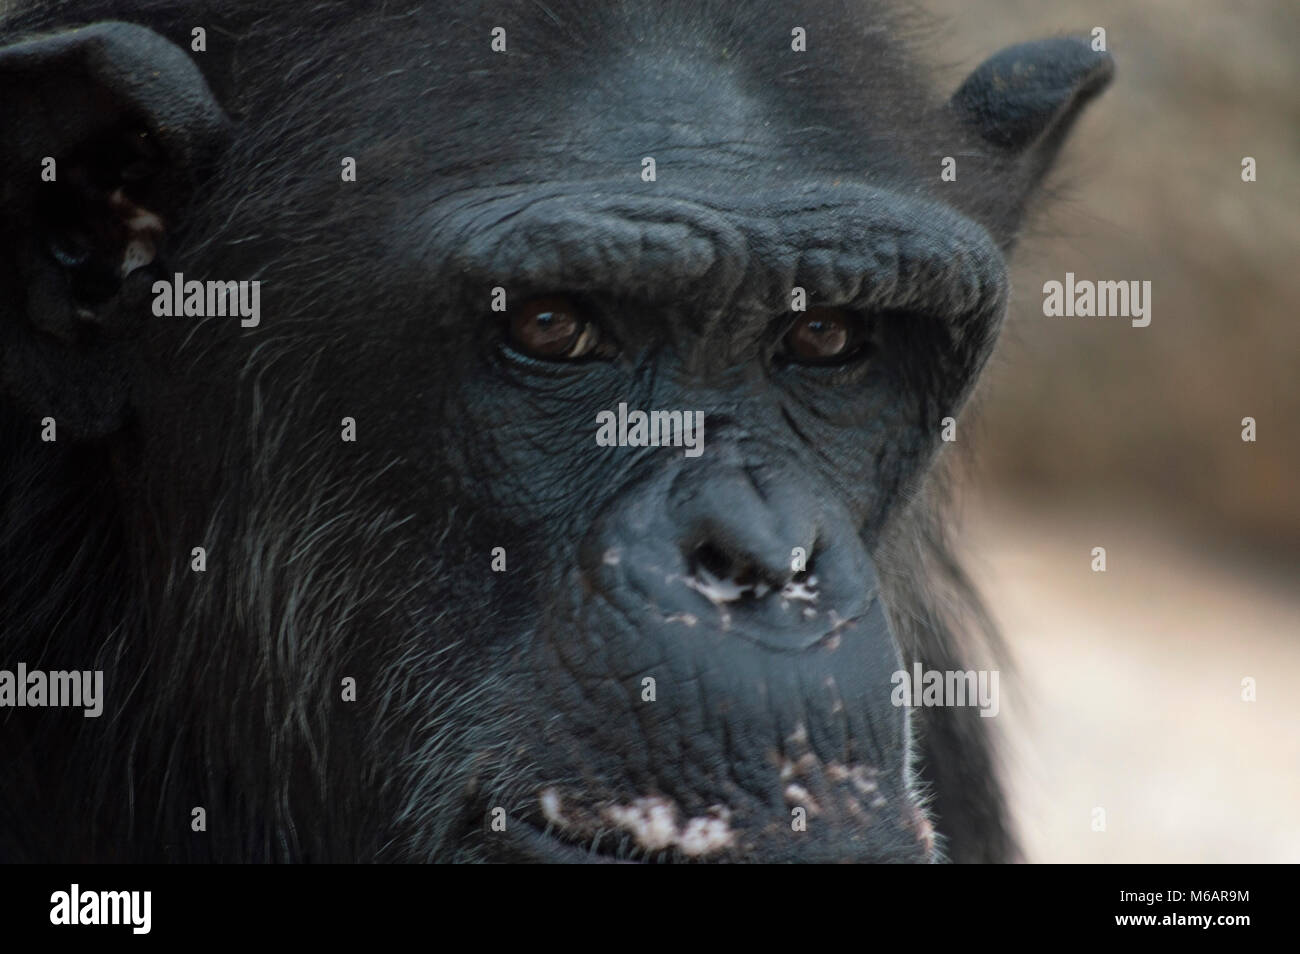 close up of a chimpanzee face Stock Photo